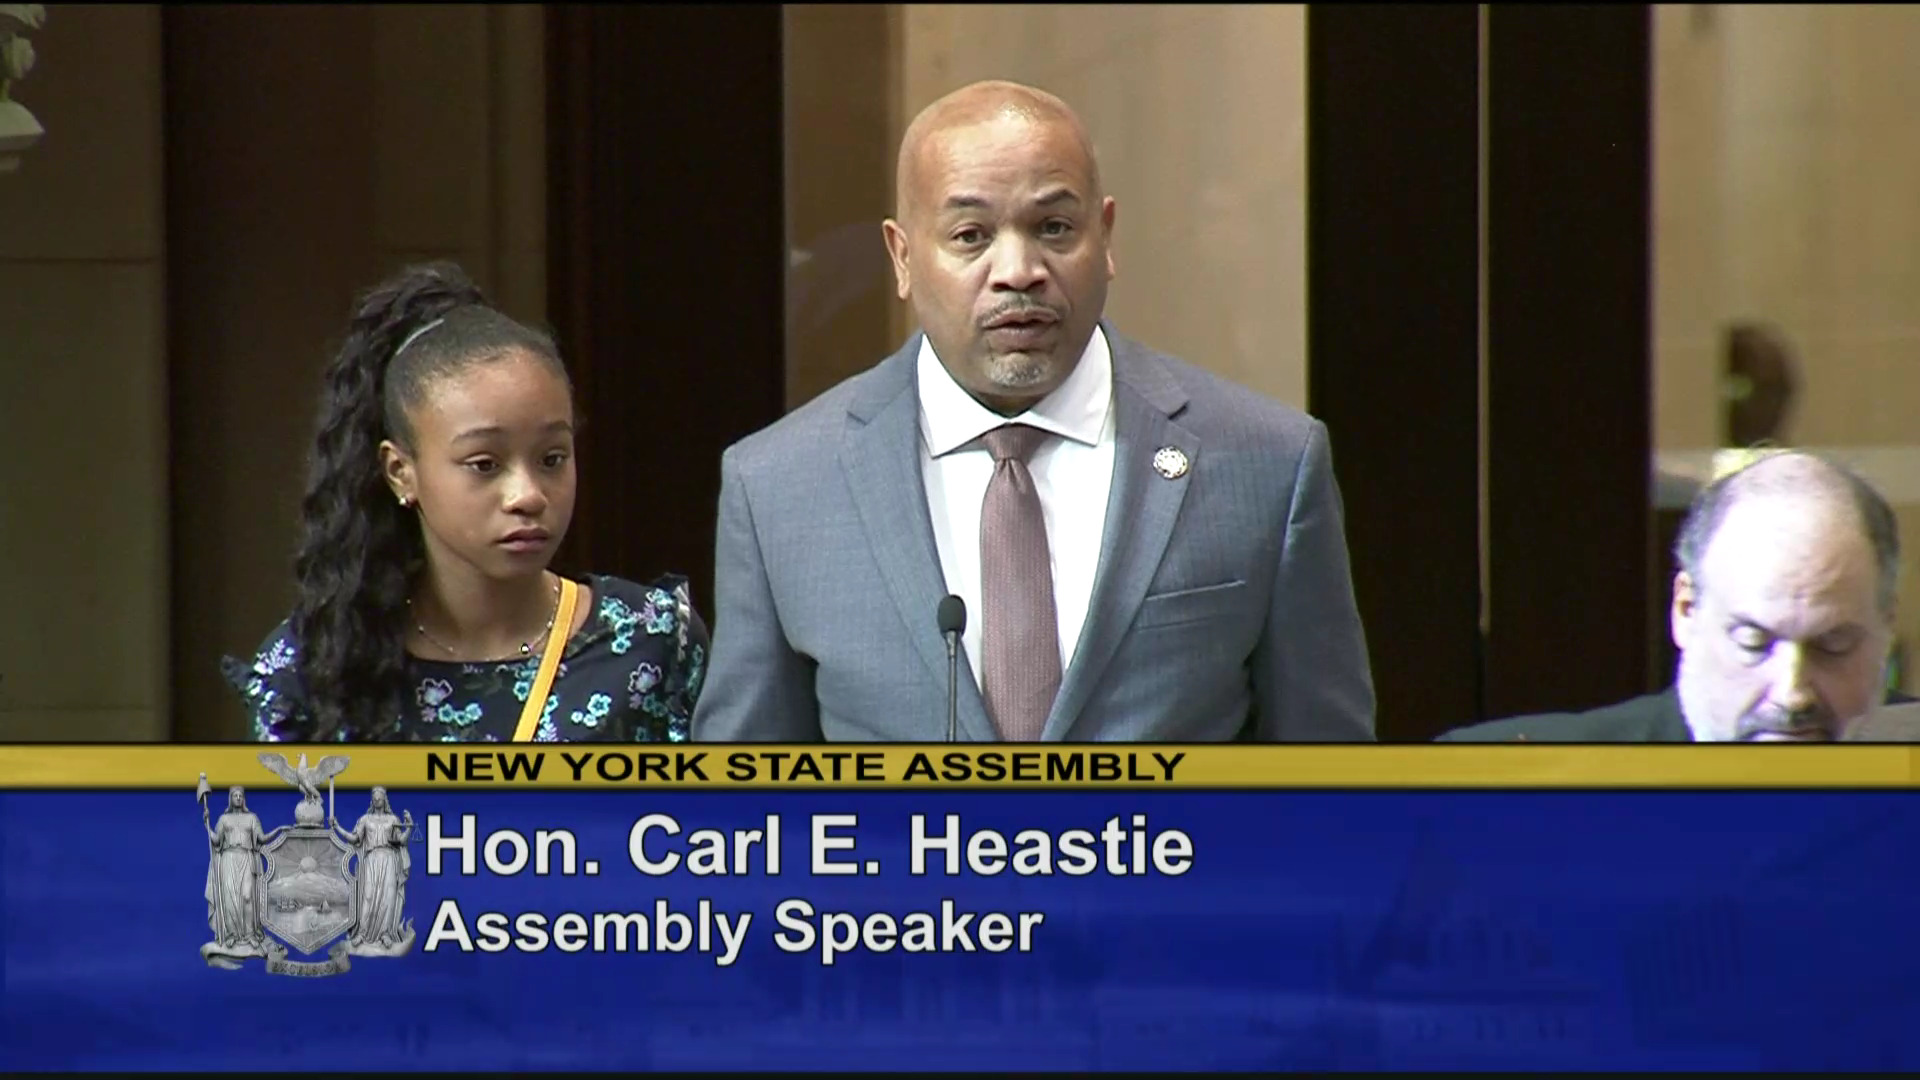 Speaker Heastie’s opening remarks